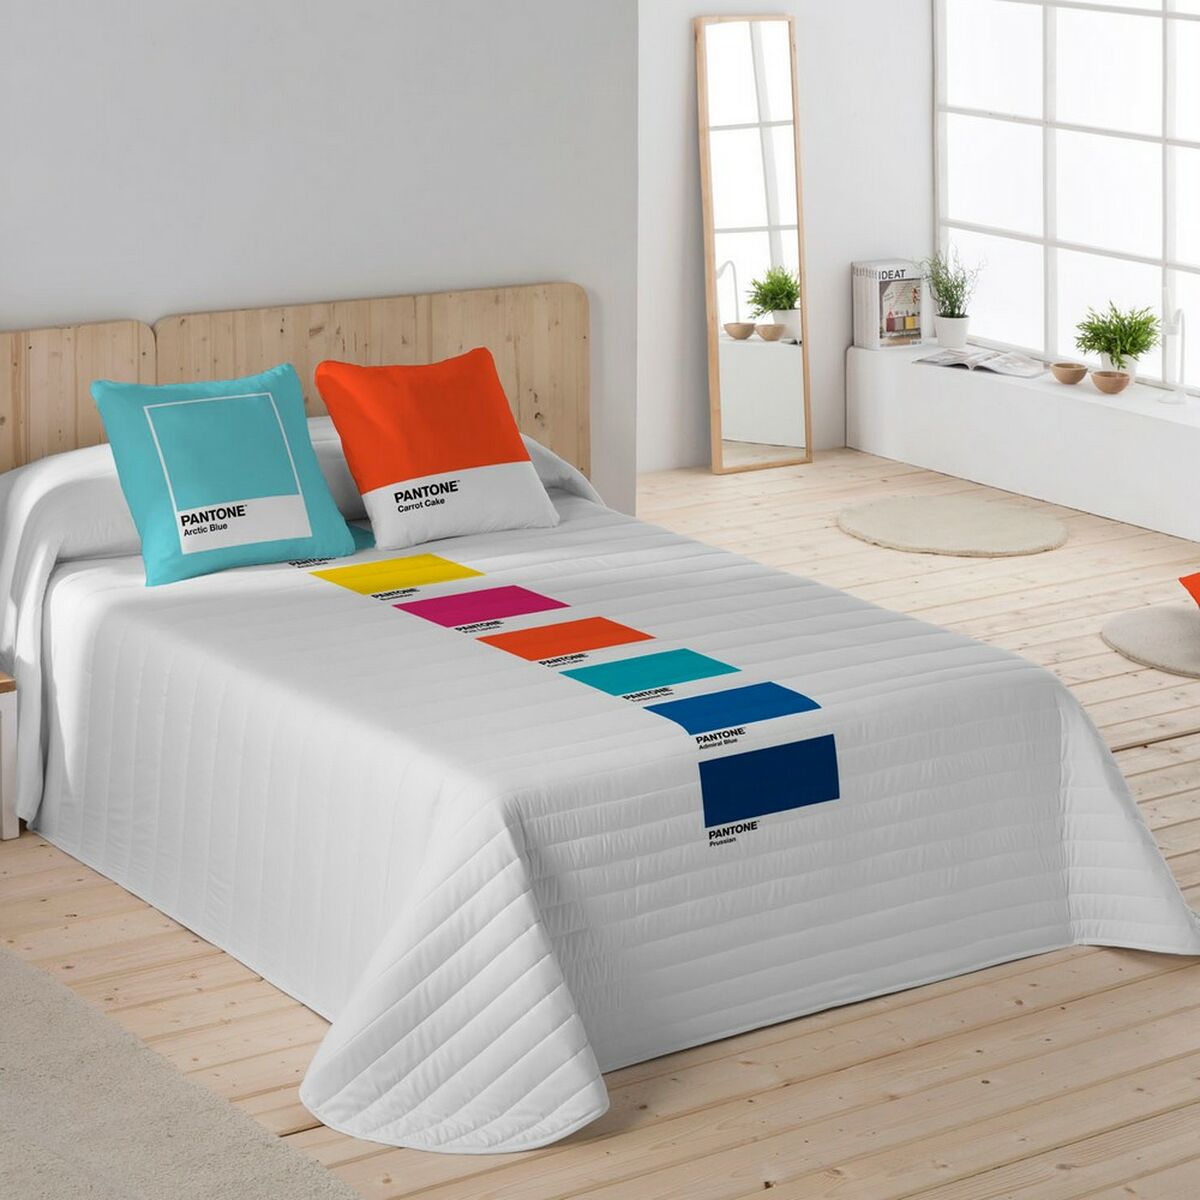 Bedspread (quilt) Fun Deck A Pantone